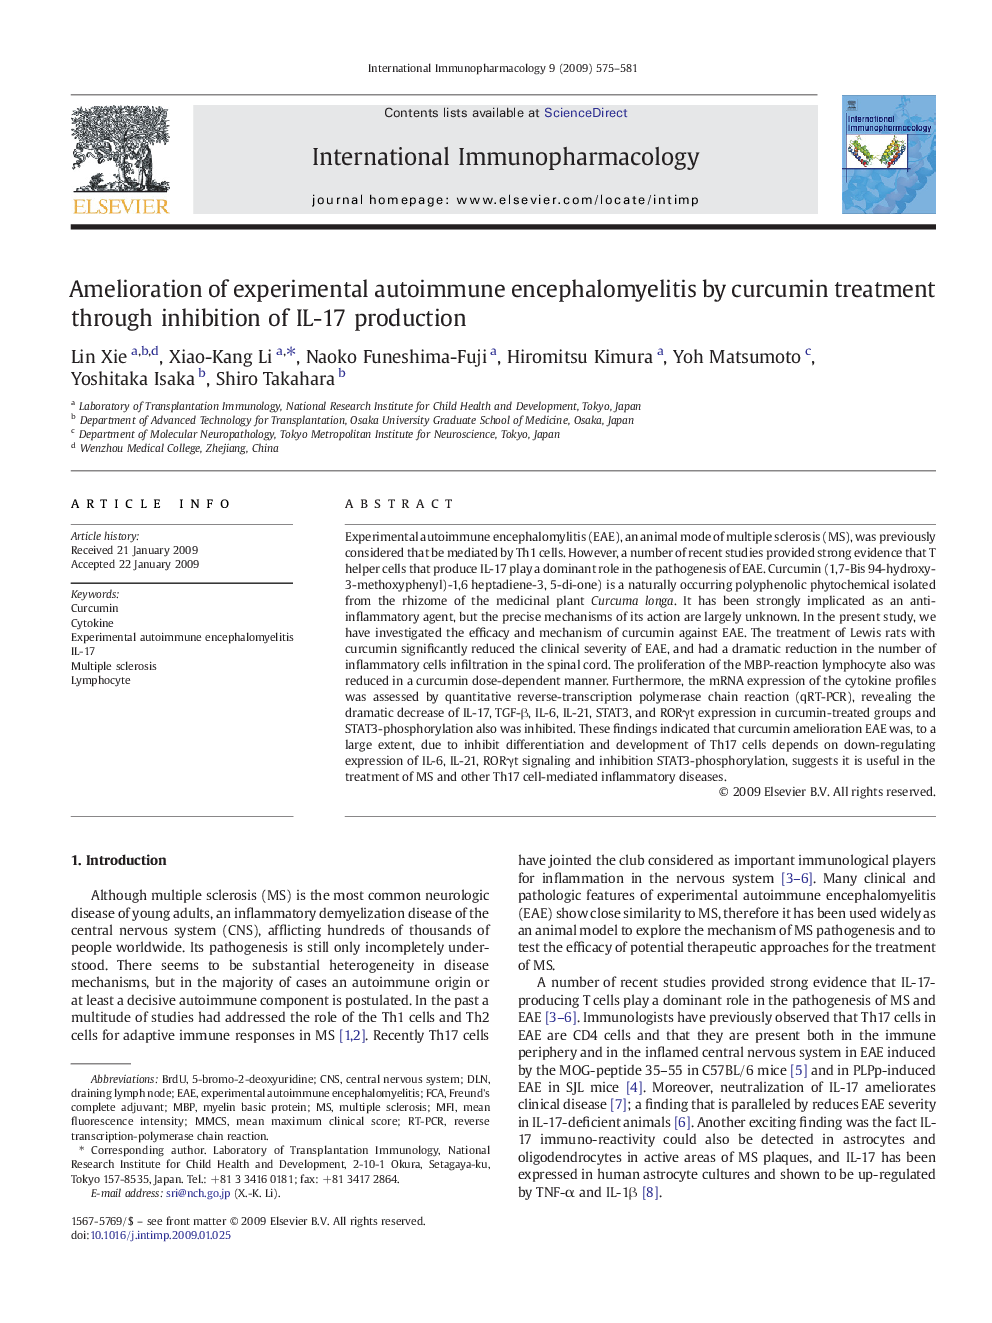 Amelioration of experimental autoimmune encephalomyelitis by curcumin treatment through inhibition of IL-17 production